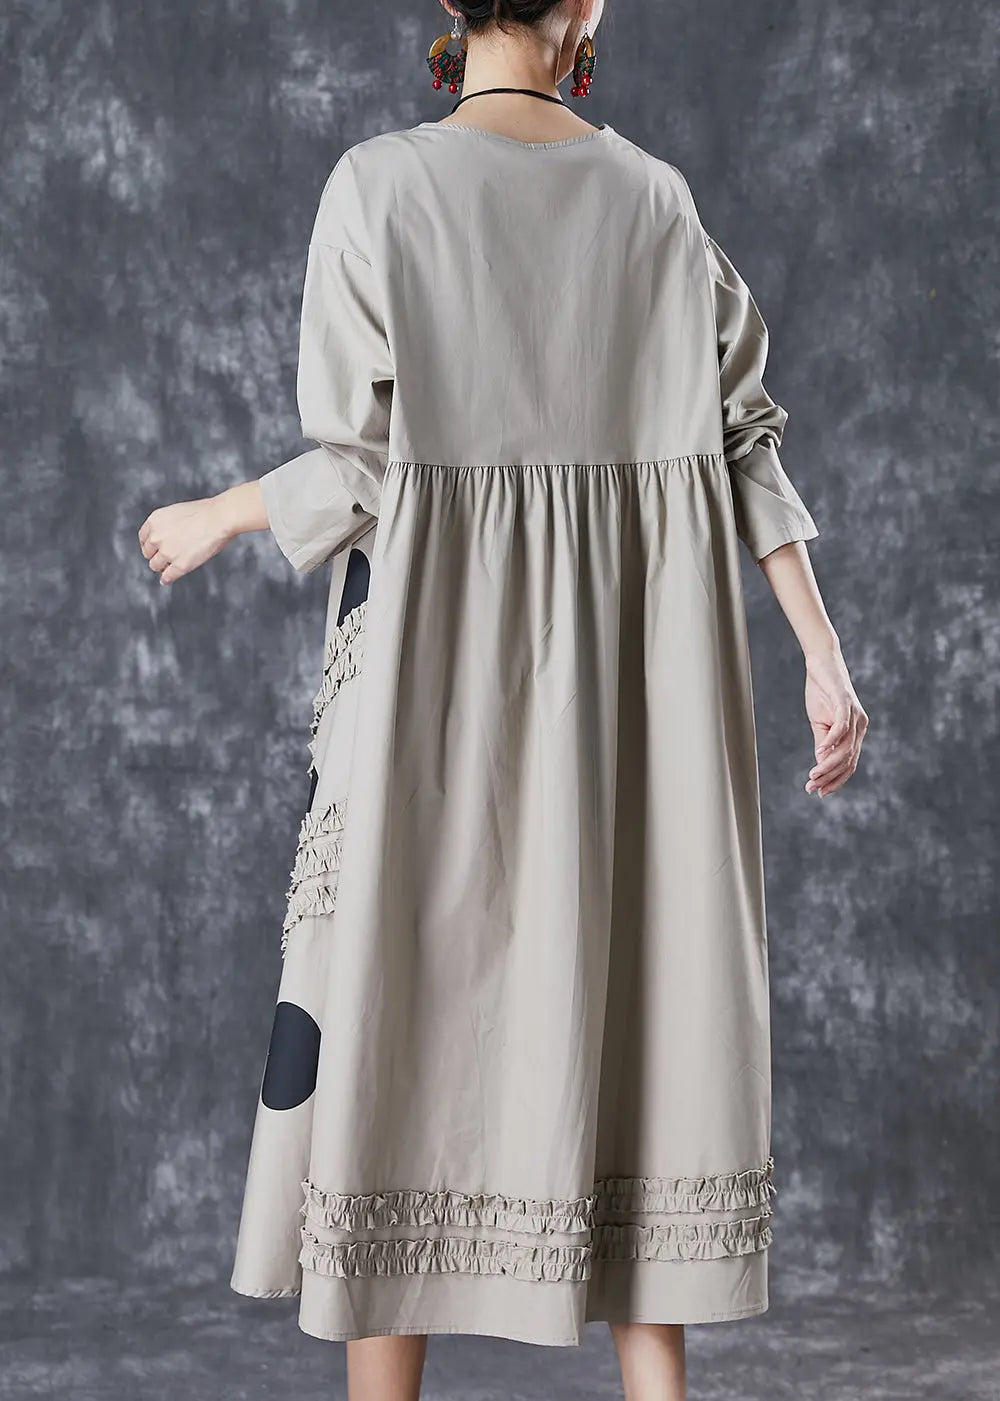 Grey Patchwork Cotton Holiday Dress Ruffled Spring Ada Fashion